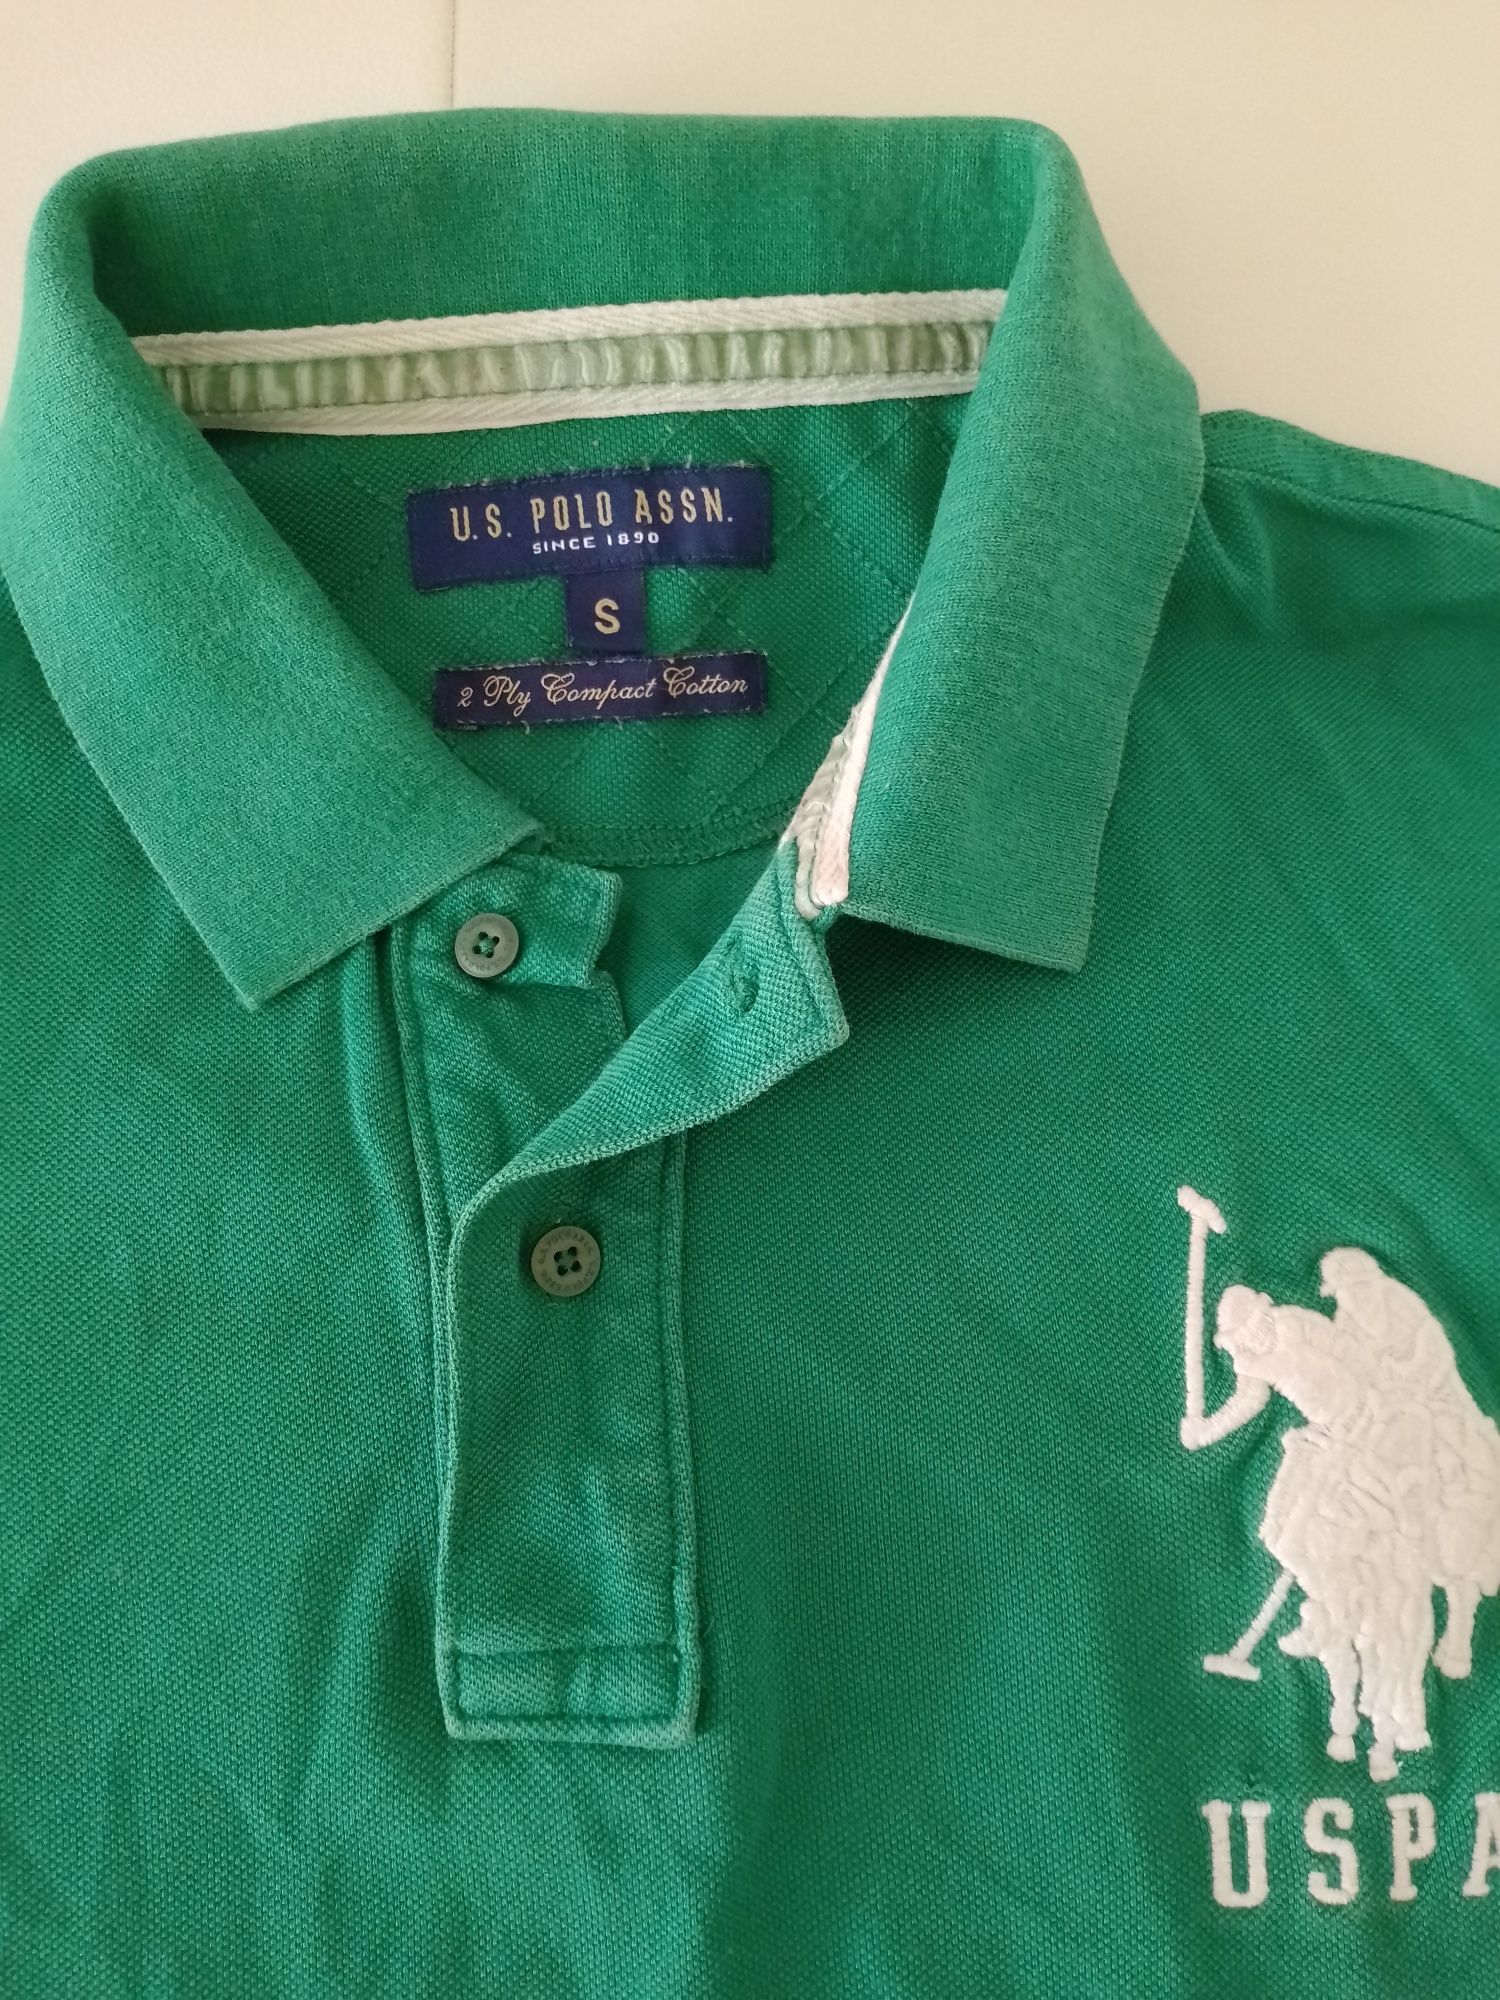 Vând tricou polo ,produs original, mărimea M,produs calitate